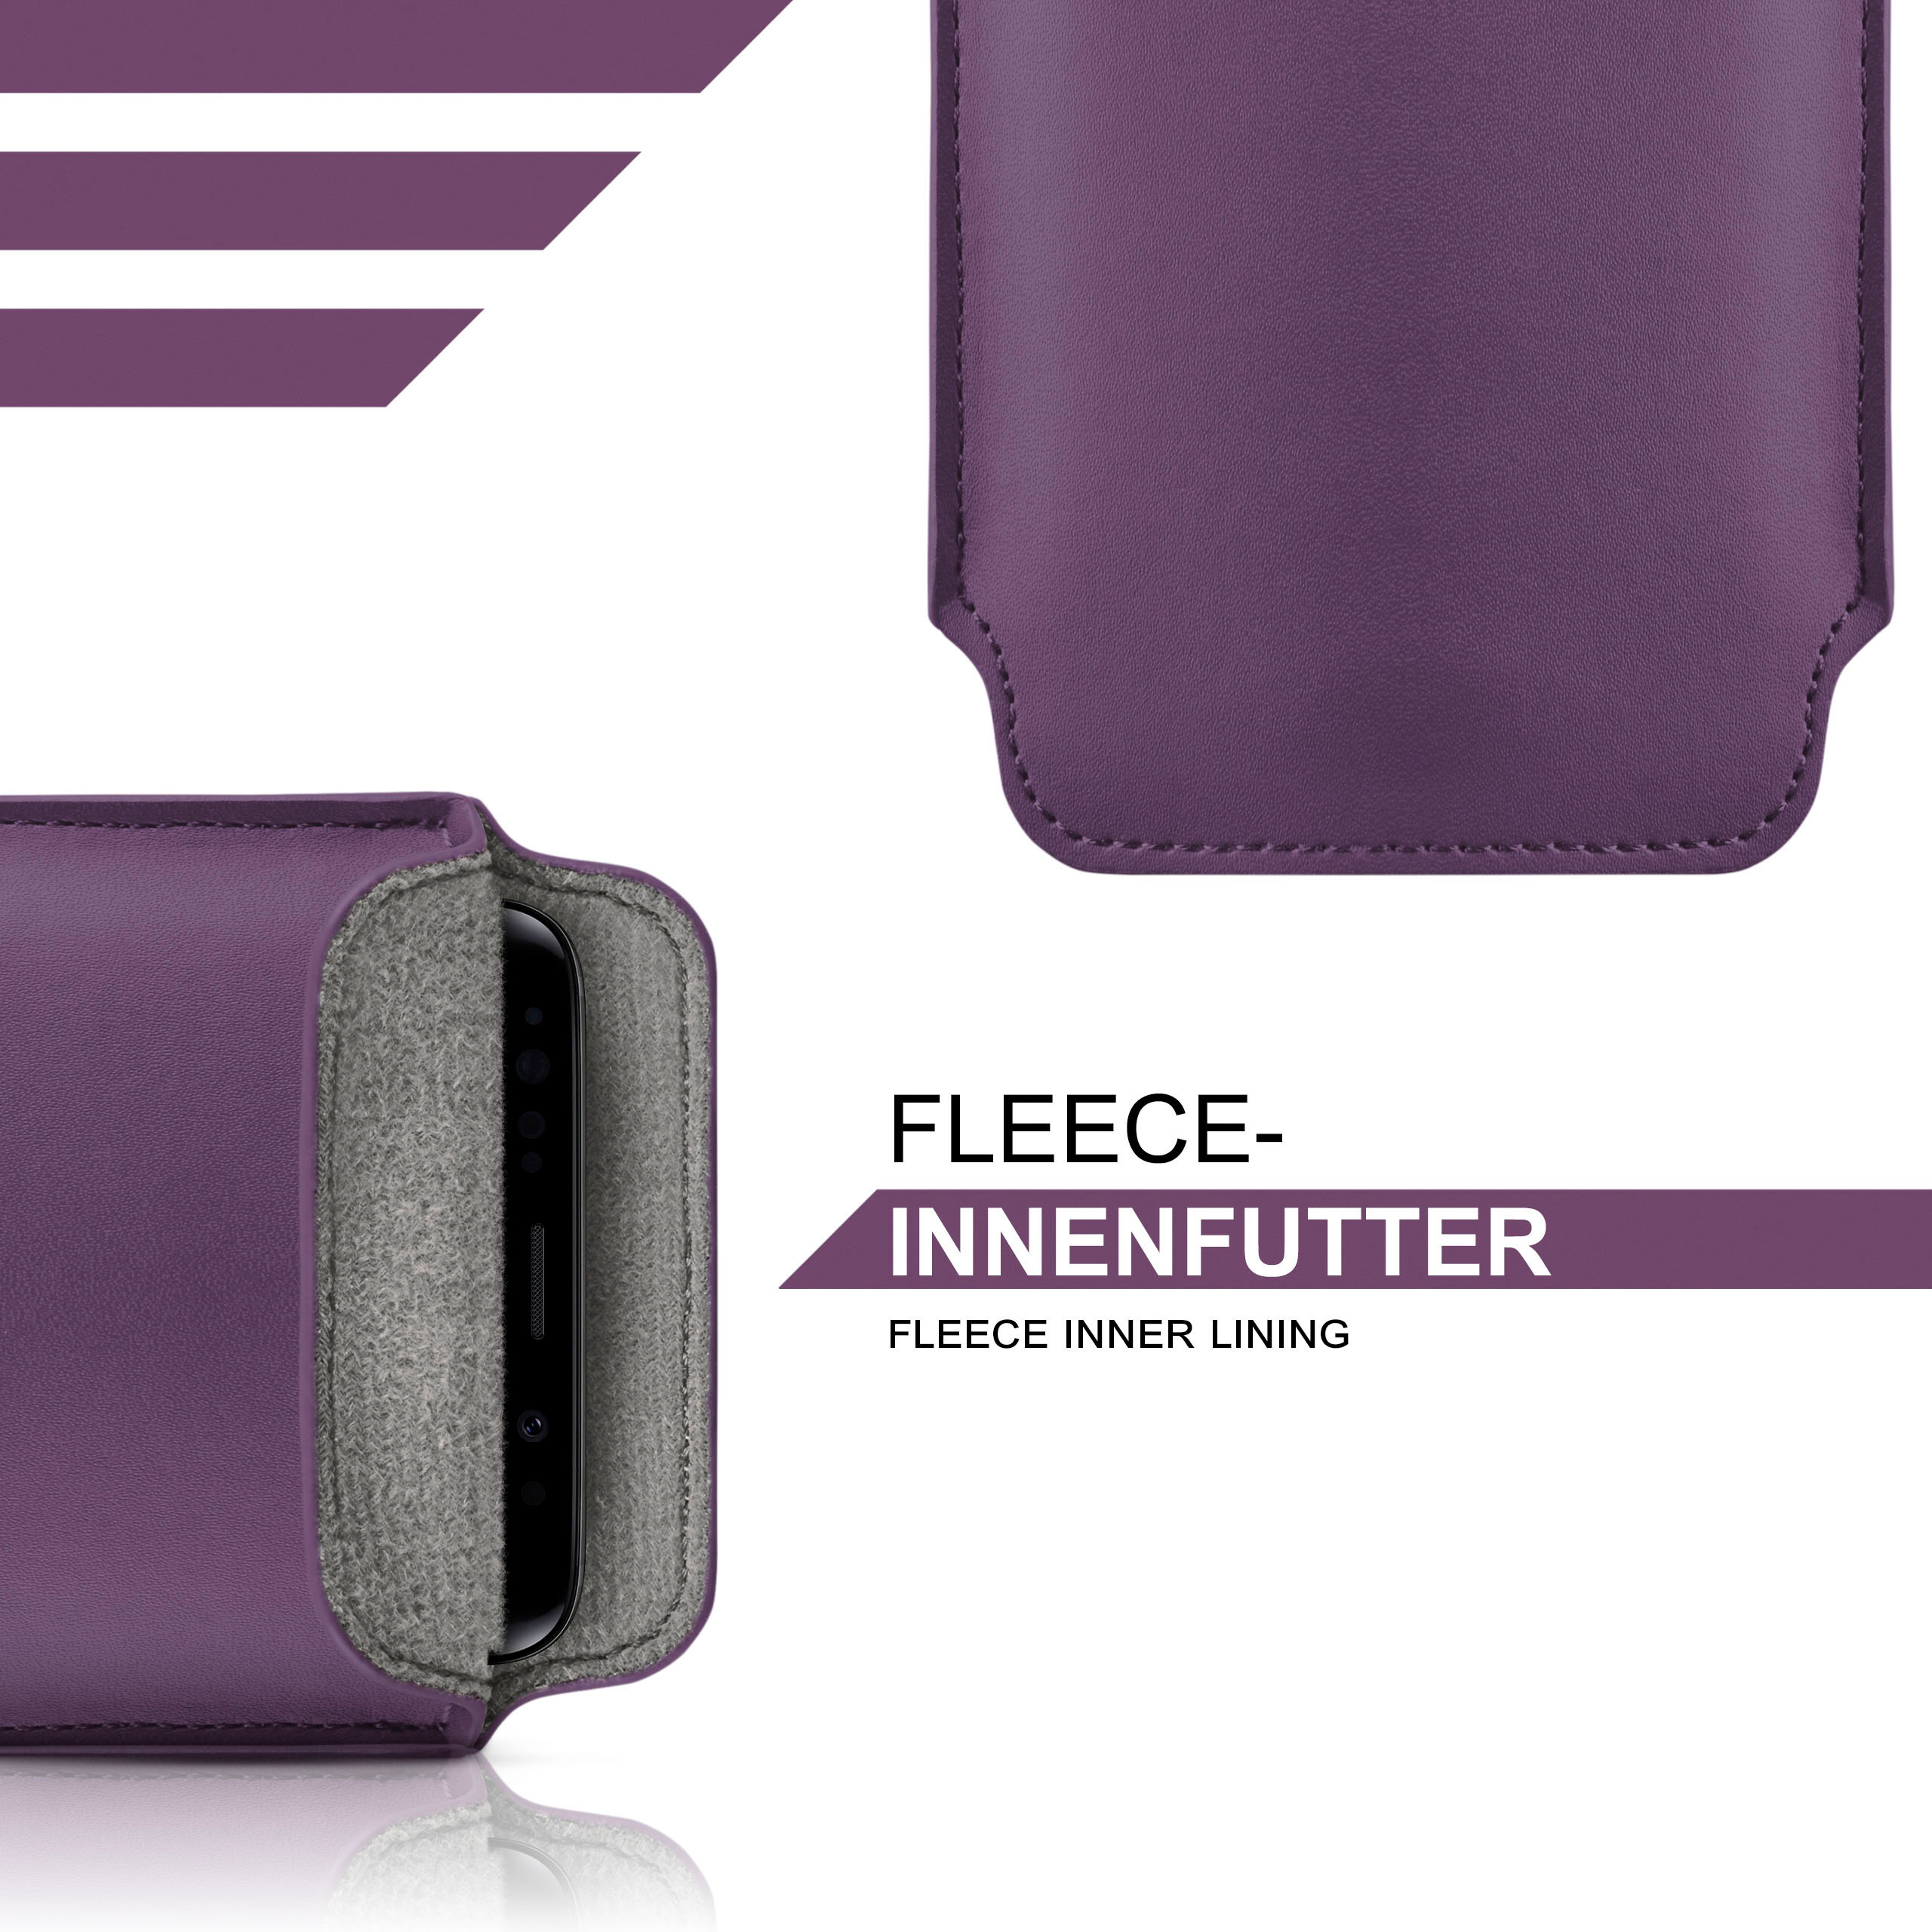 Cover, MOEX Indigo-Violet 515, Case, Full Nokia, Slide